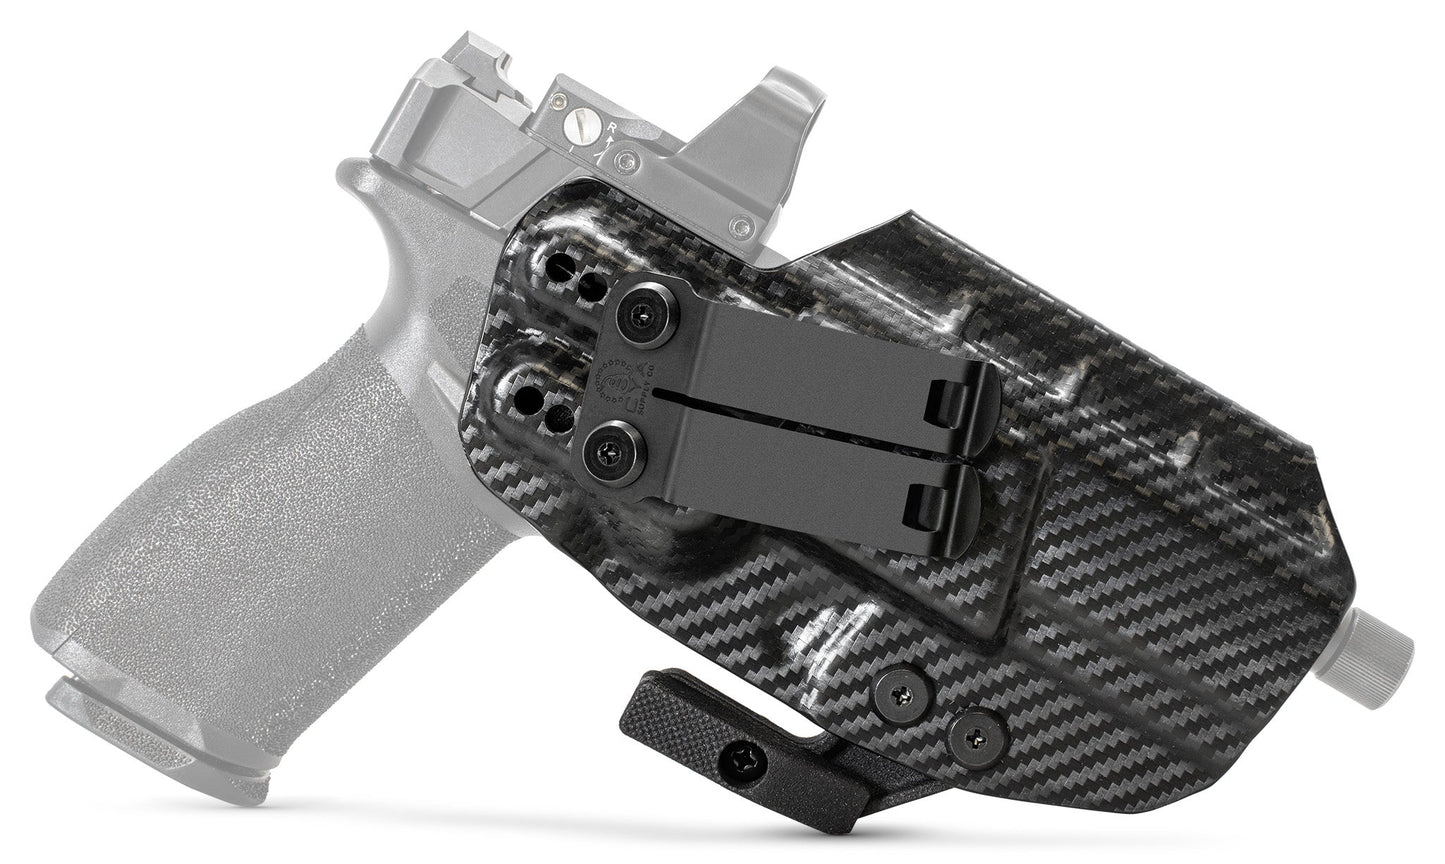 CYA PATH IWB Holster in carbons steel with a black clip on a black springfield echelon handgun